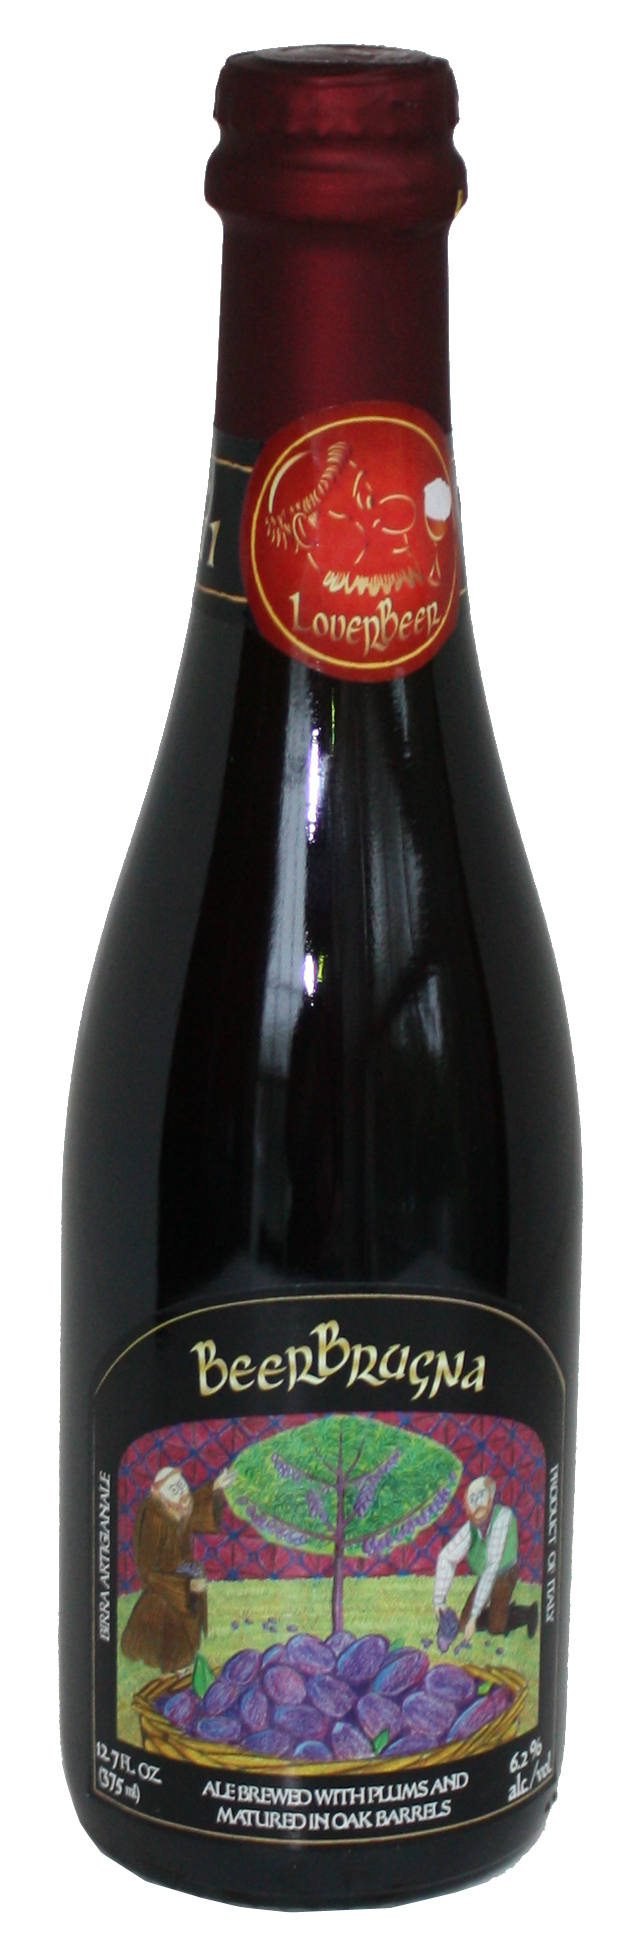 BeerBrugna bottle